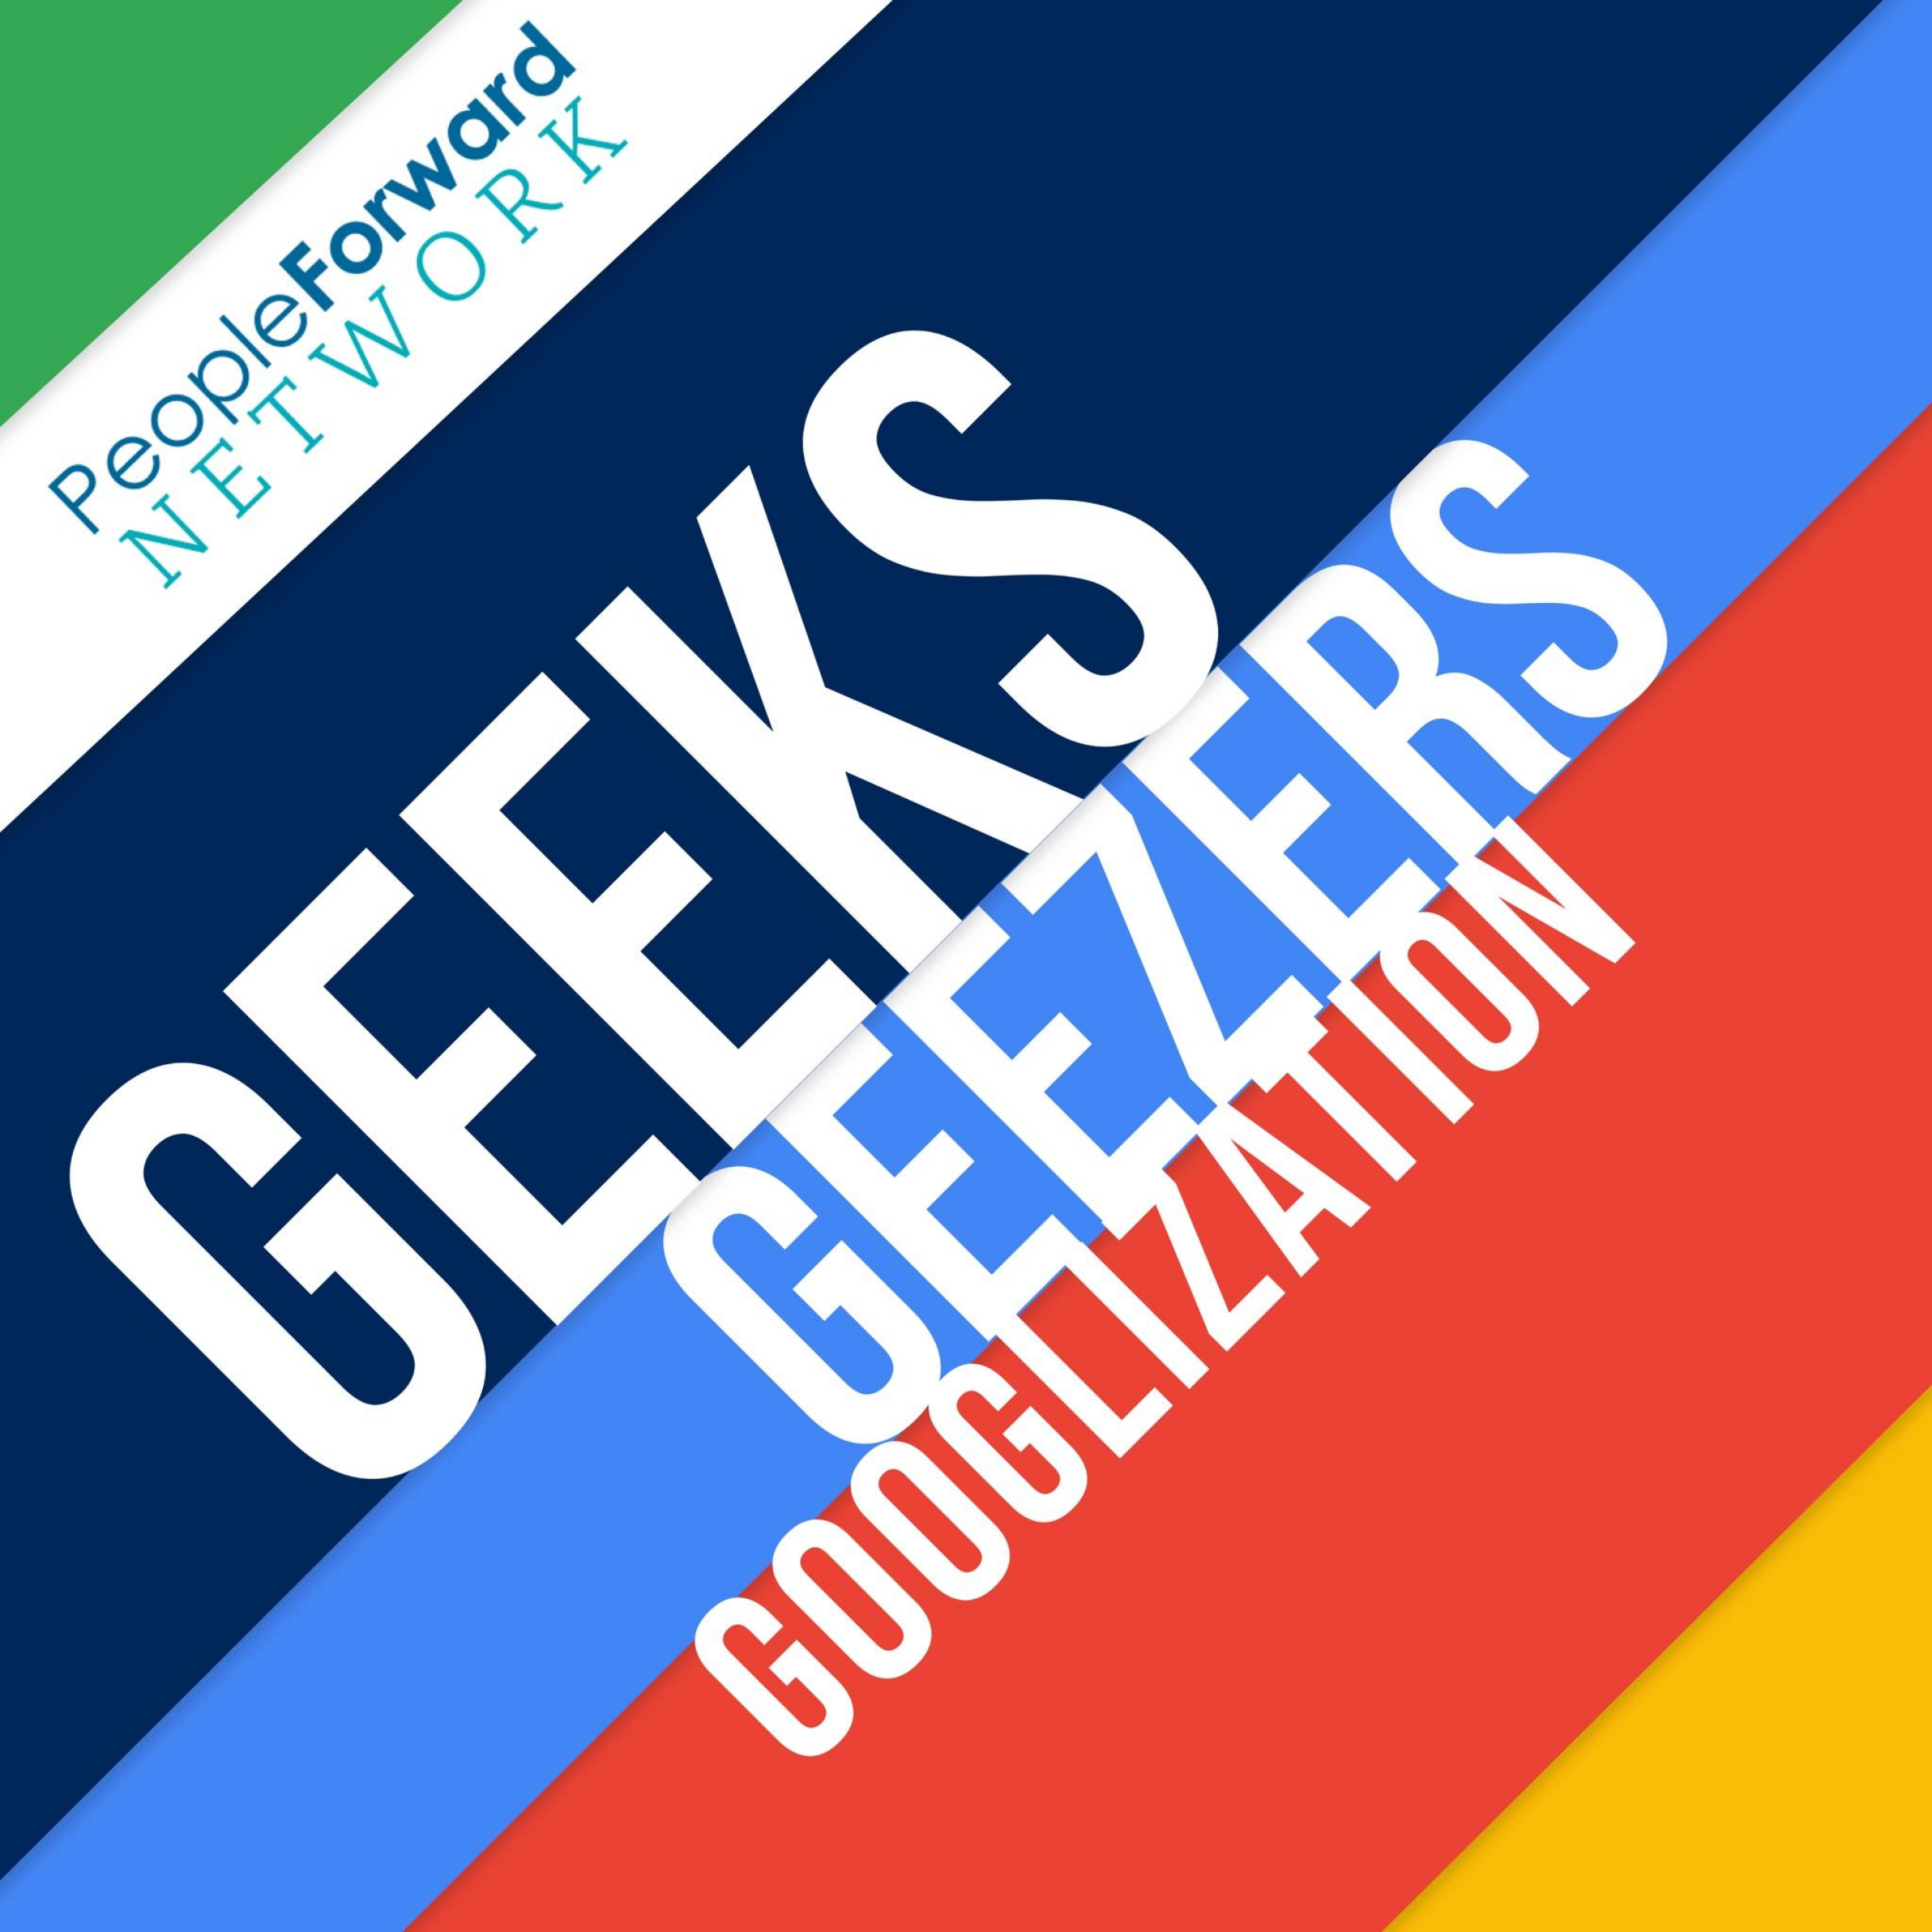 Geeks Geezers Googlization